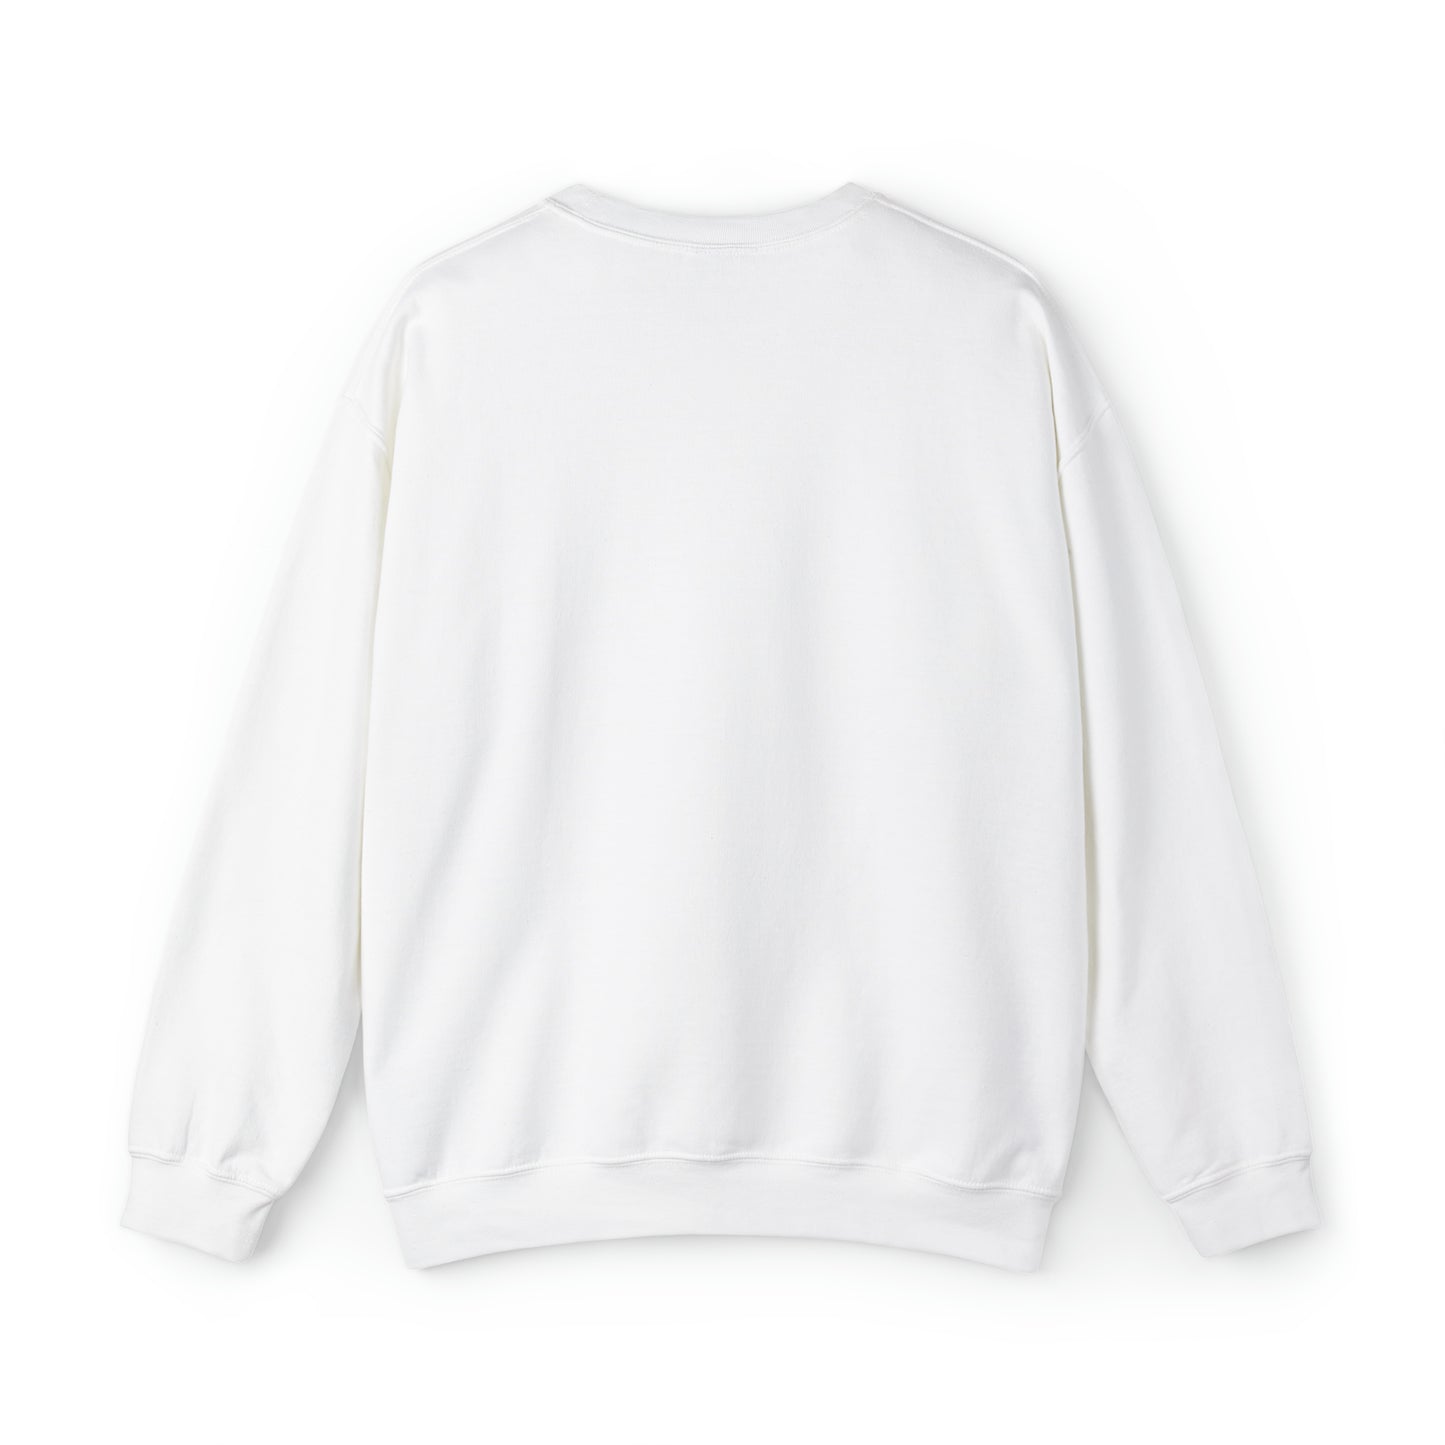 Tis The Season Latte Unisex Heavy Blend Crewneck Sweatshirt